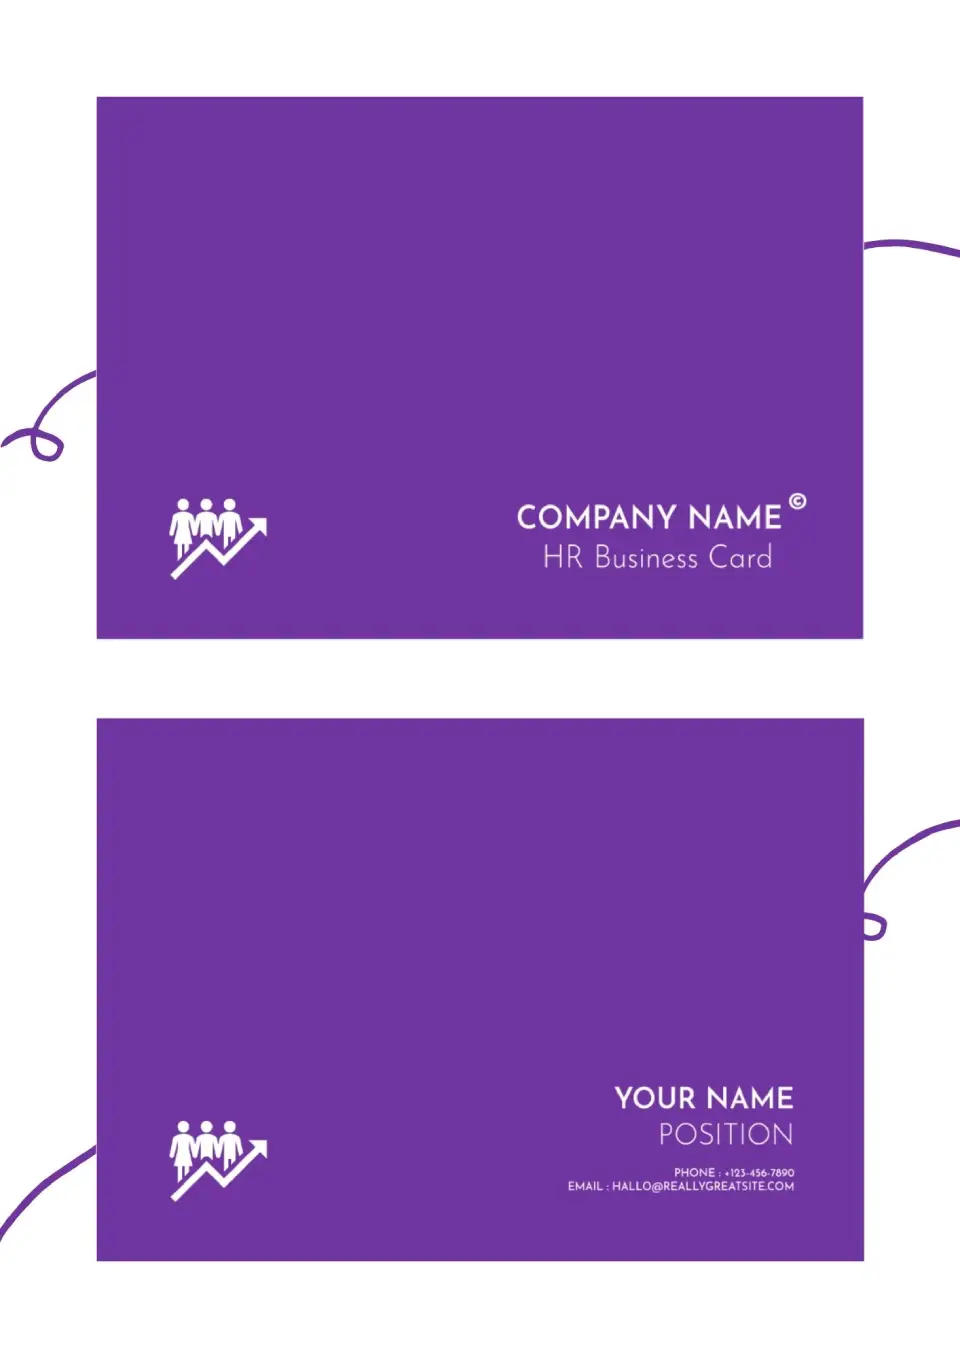 HR Business Card Template